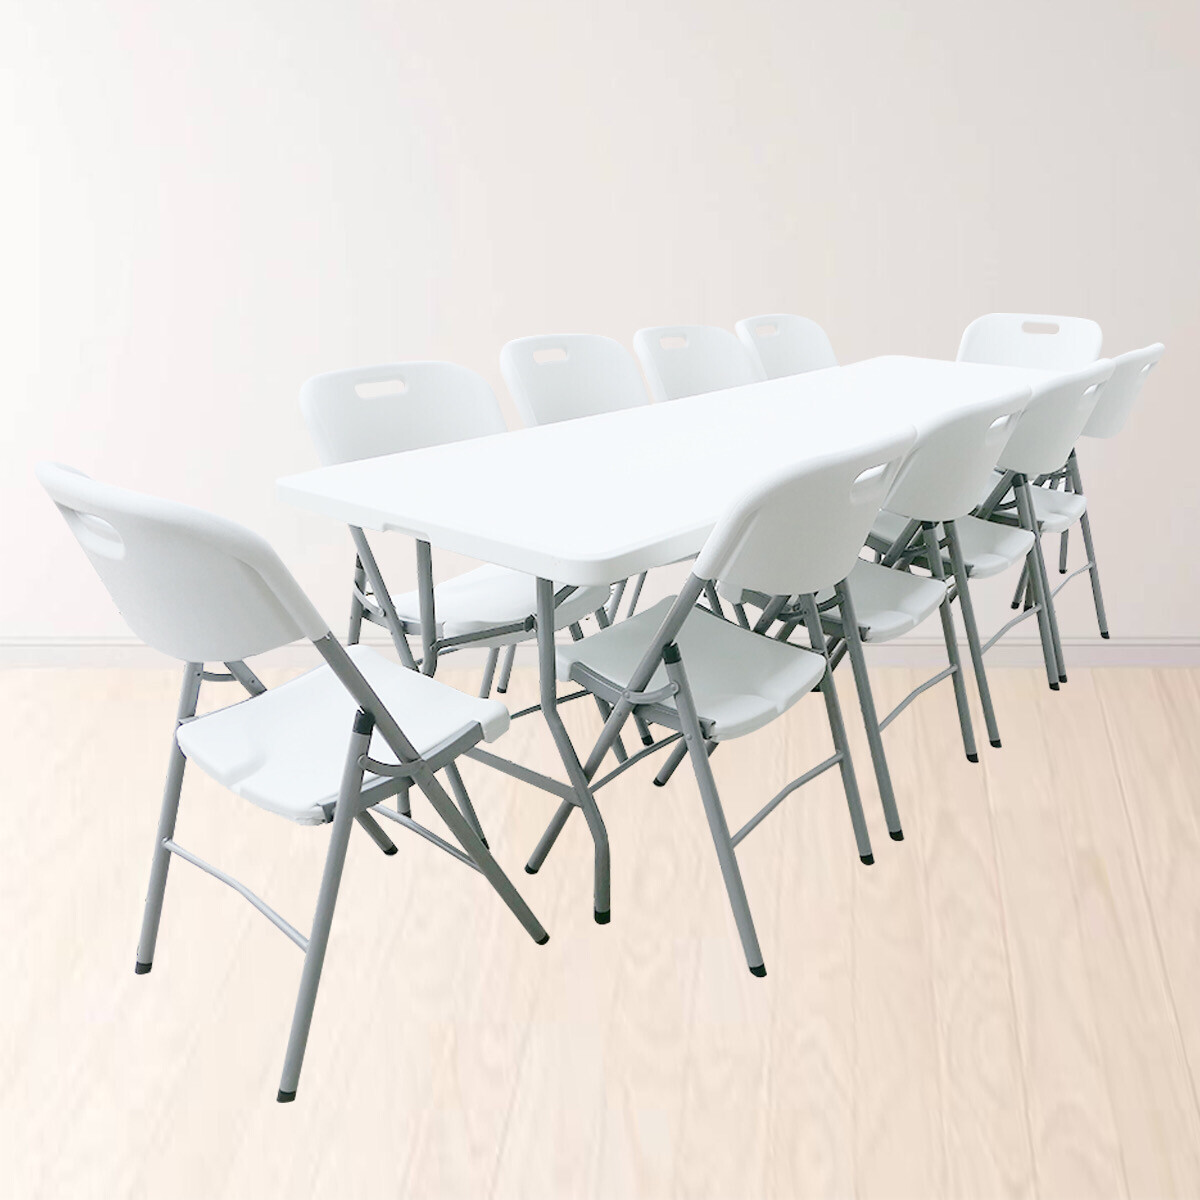 2.4m Rectangular Table + 10 Chairs